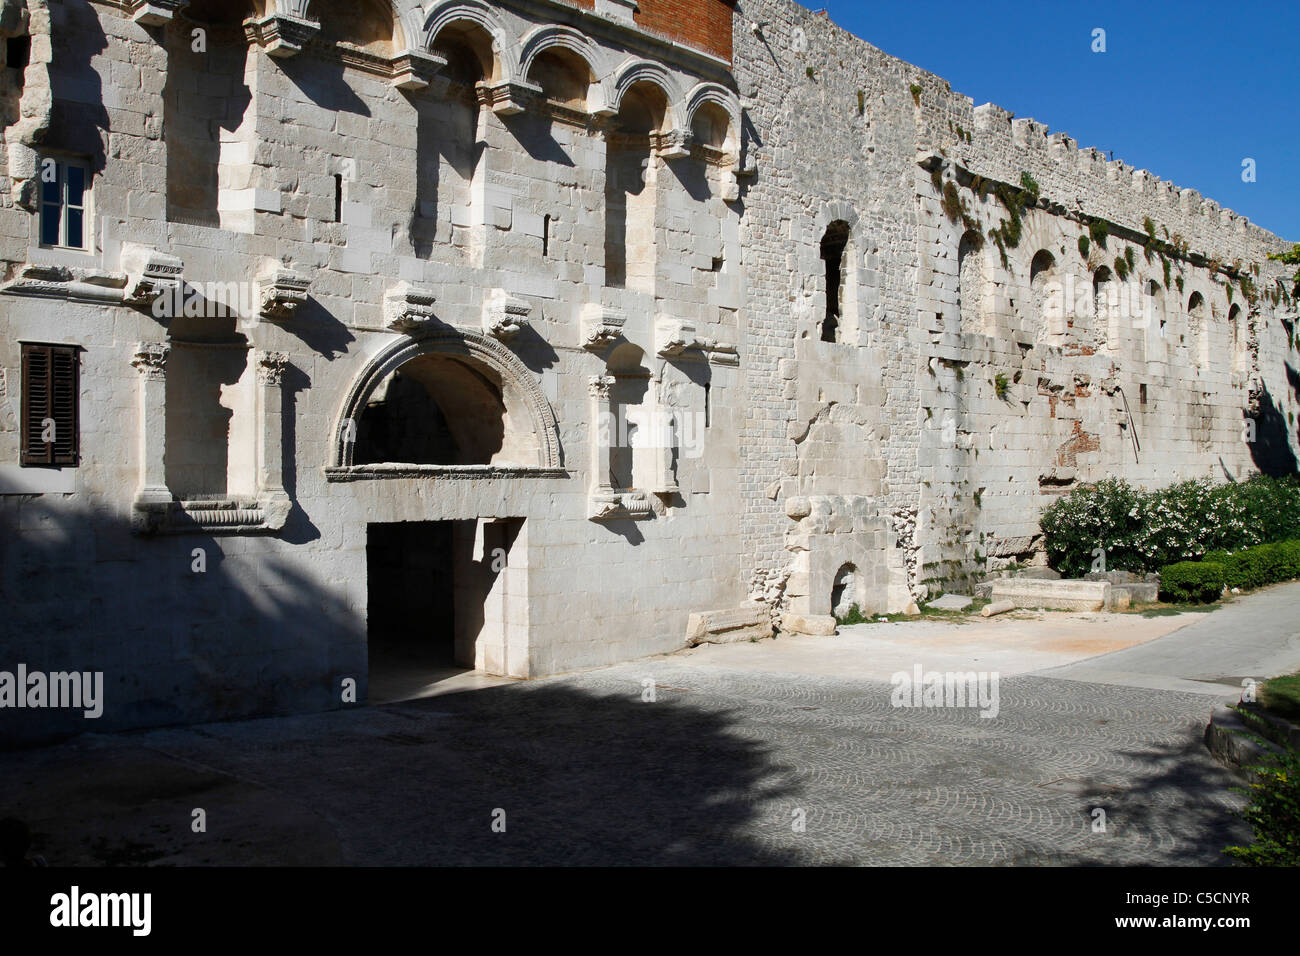 North gate - Porta aurea - Diocletian's Palace, Split, Croatia Stock Photo